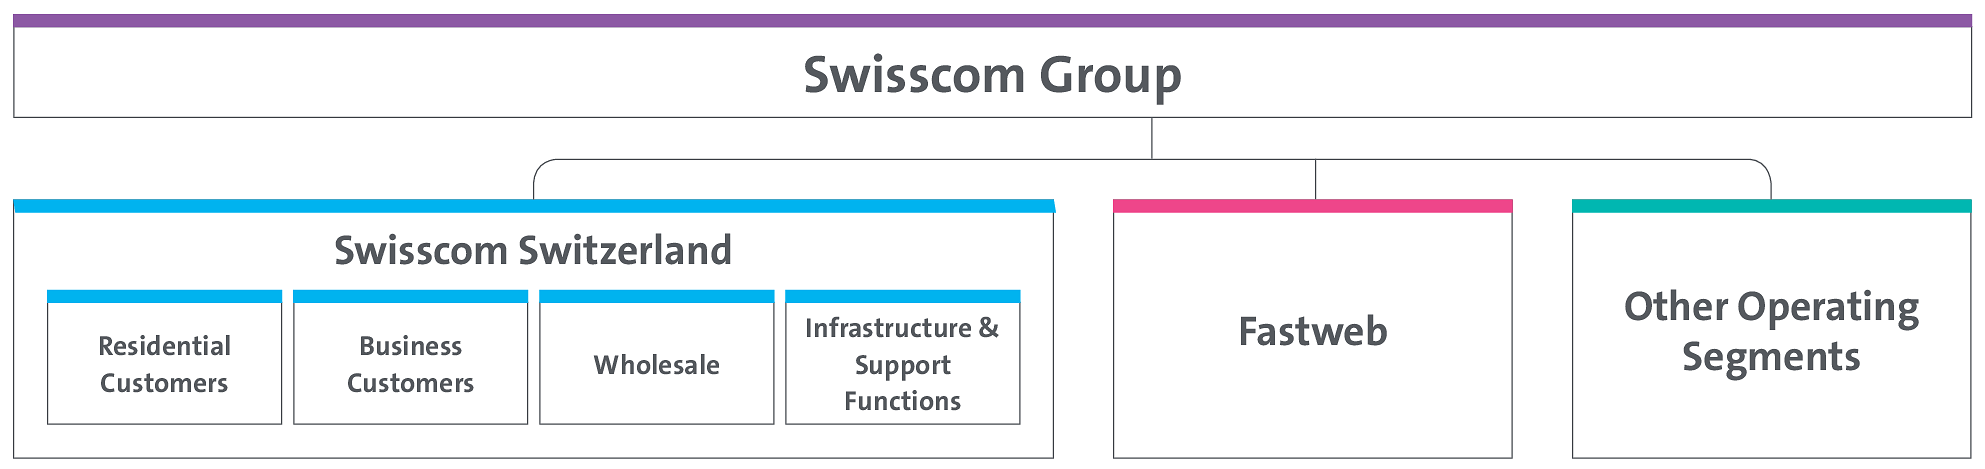 The chart shows the Swisscom Group’s organisational chart.